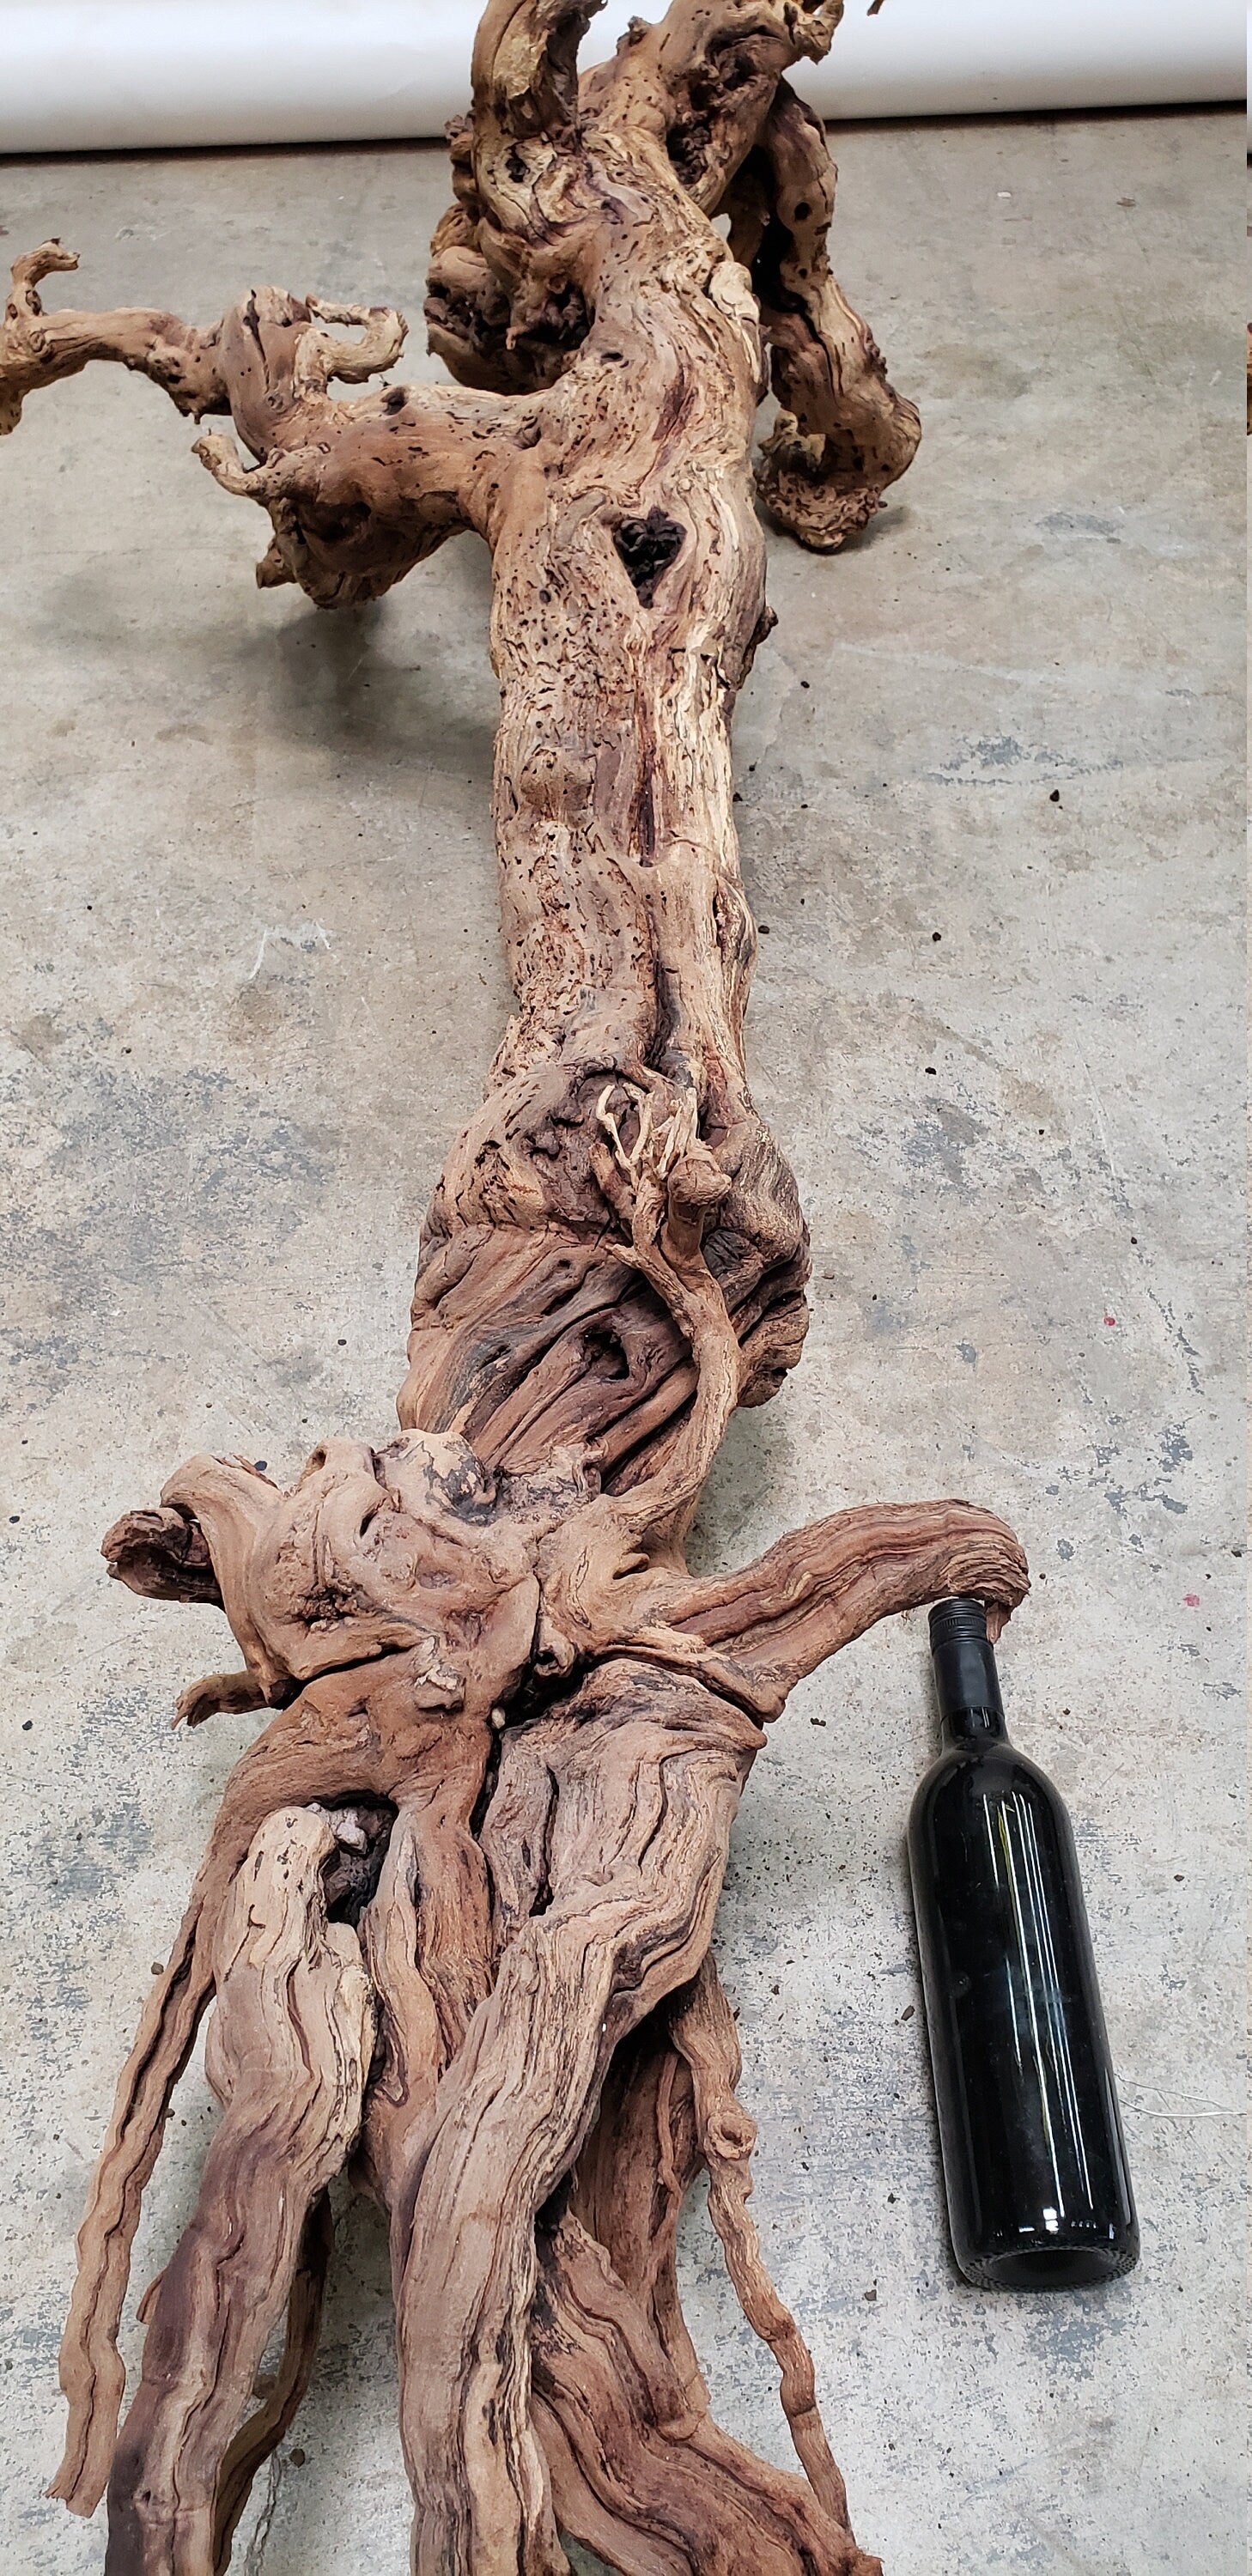 121 Year Old Grape Vine Art From Silver Oak Vineyards 0685 retired Napa Zinfandel 100% Recycled!